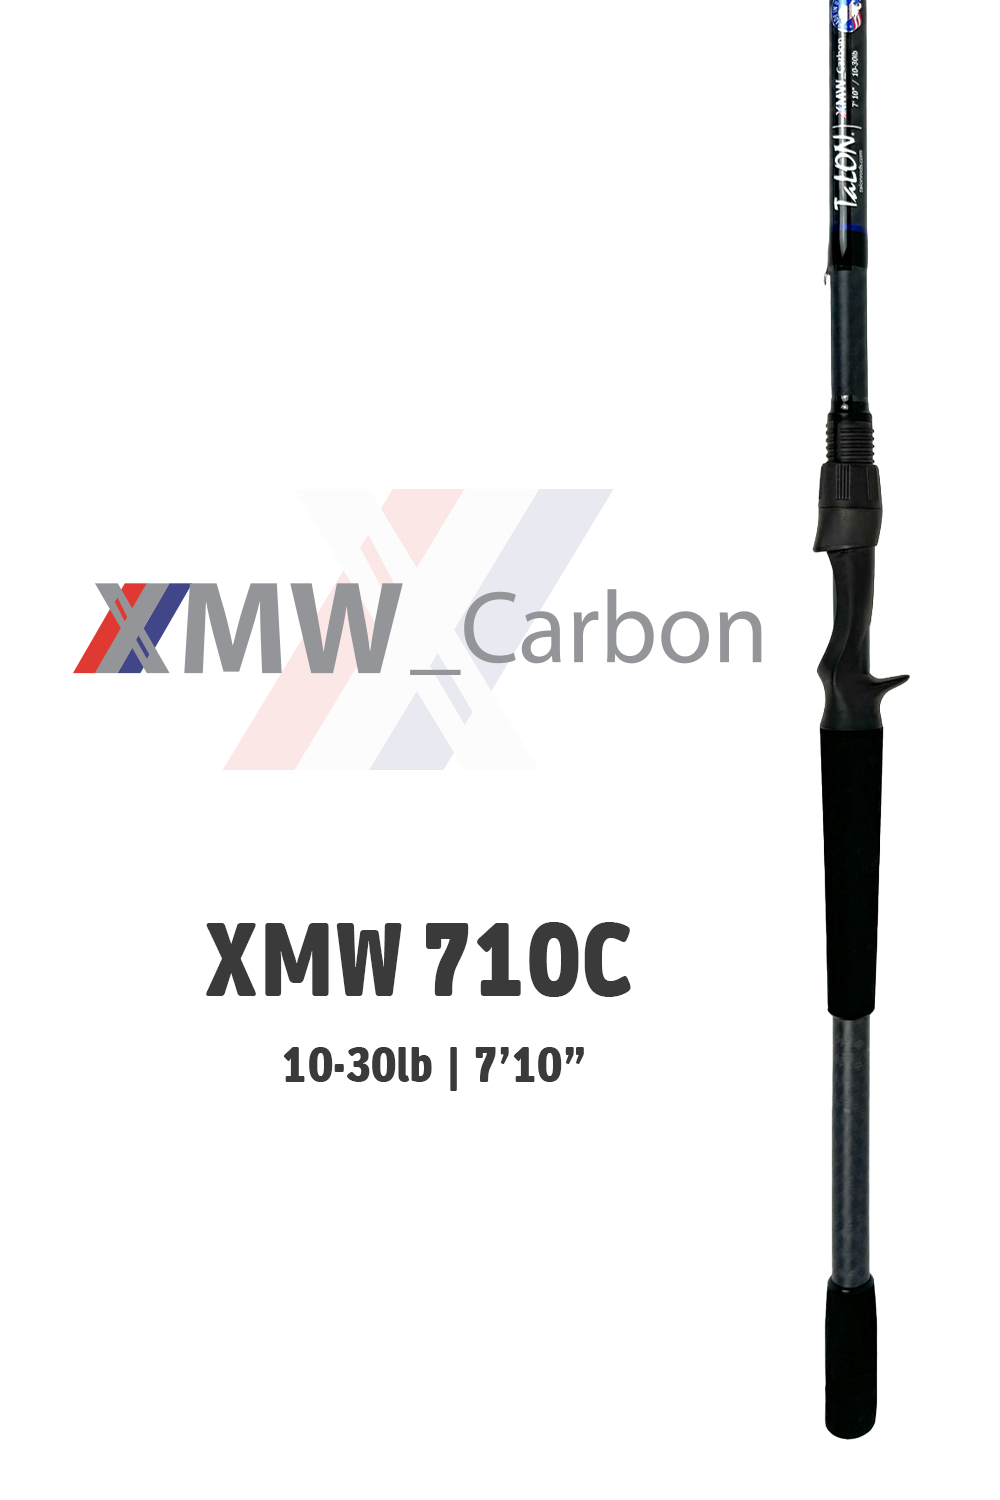 XMW_Carbon - Casting | 10-30lb - 7'10"